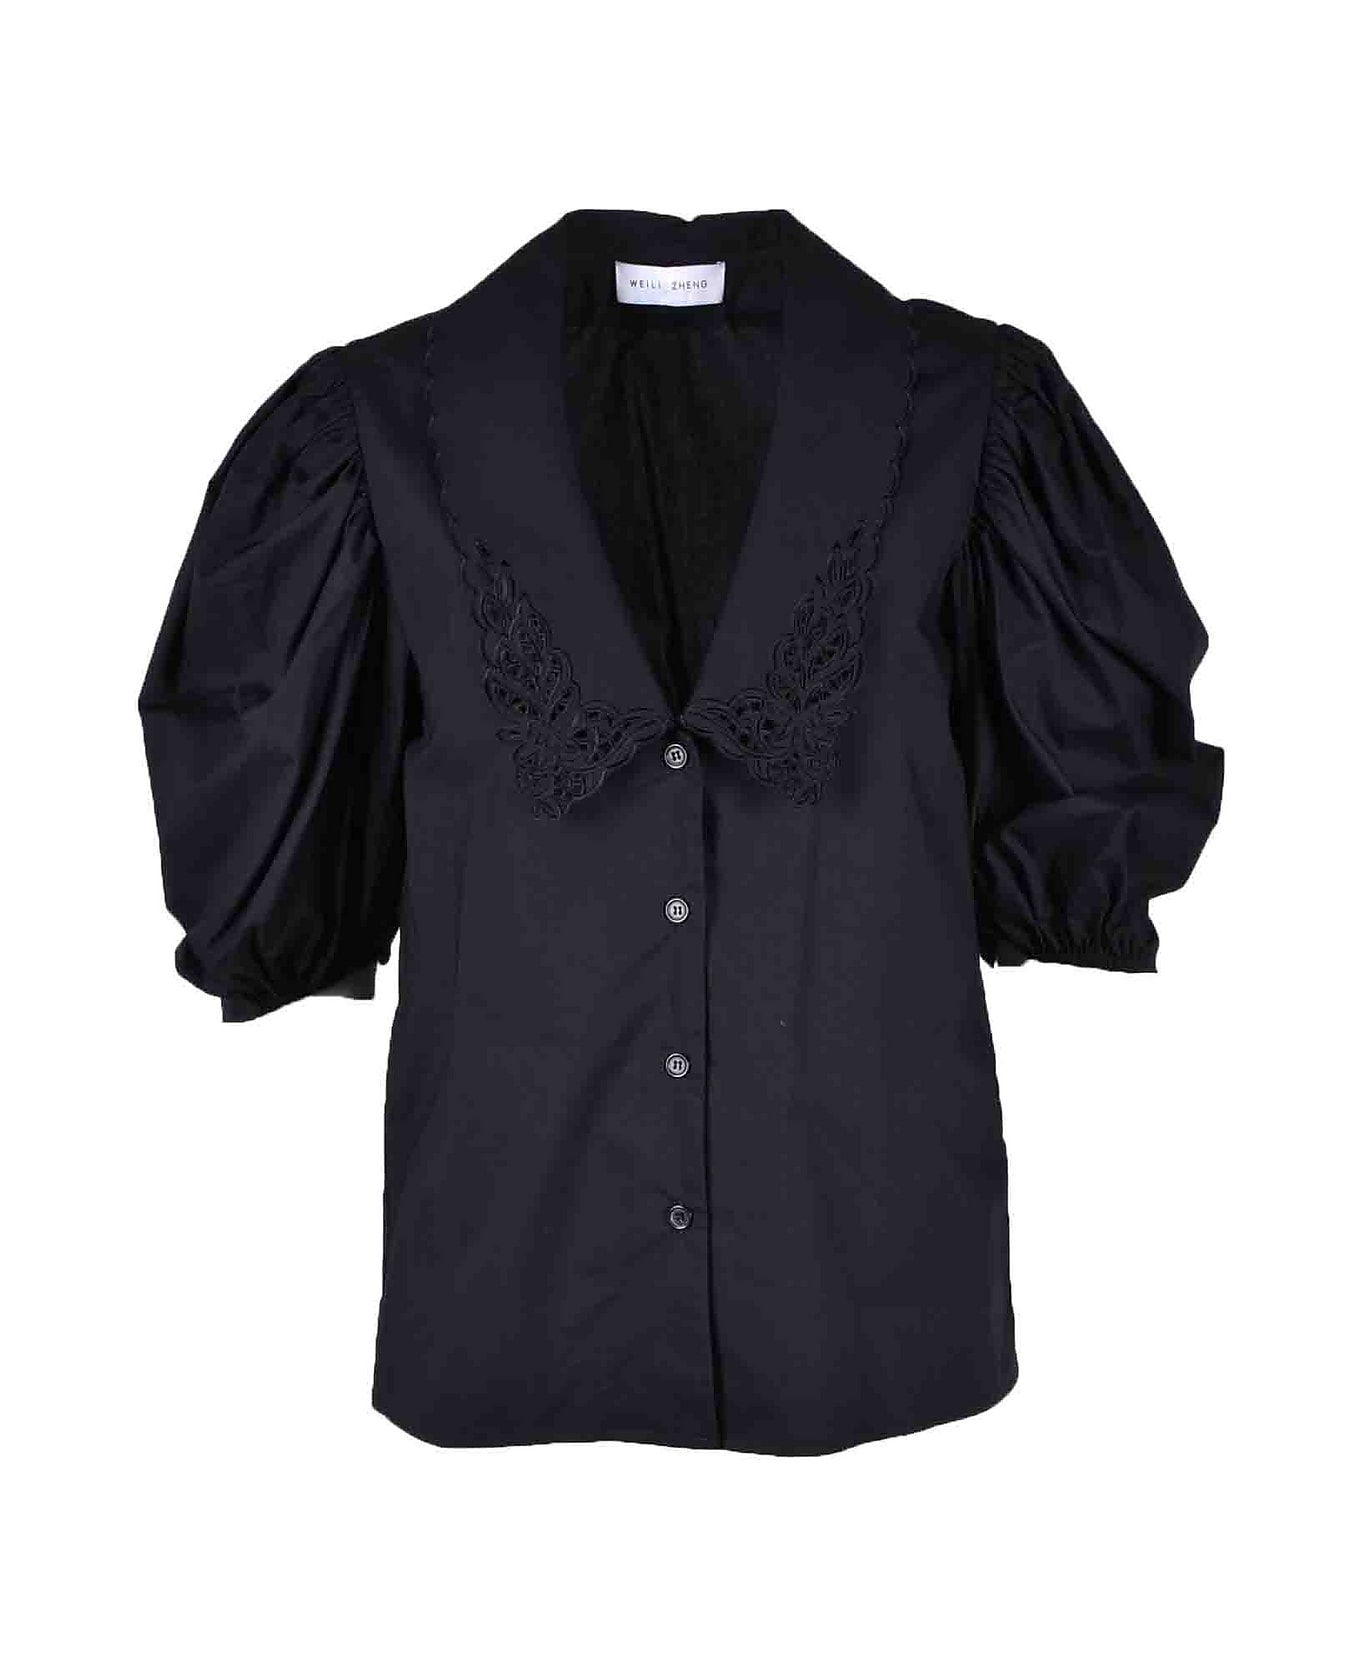 Weili Zheng Women's Black Shirt - Black